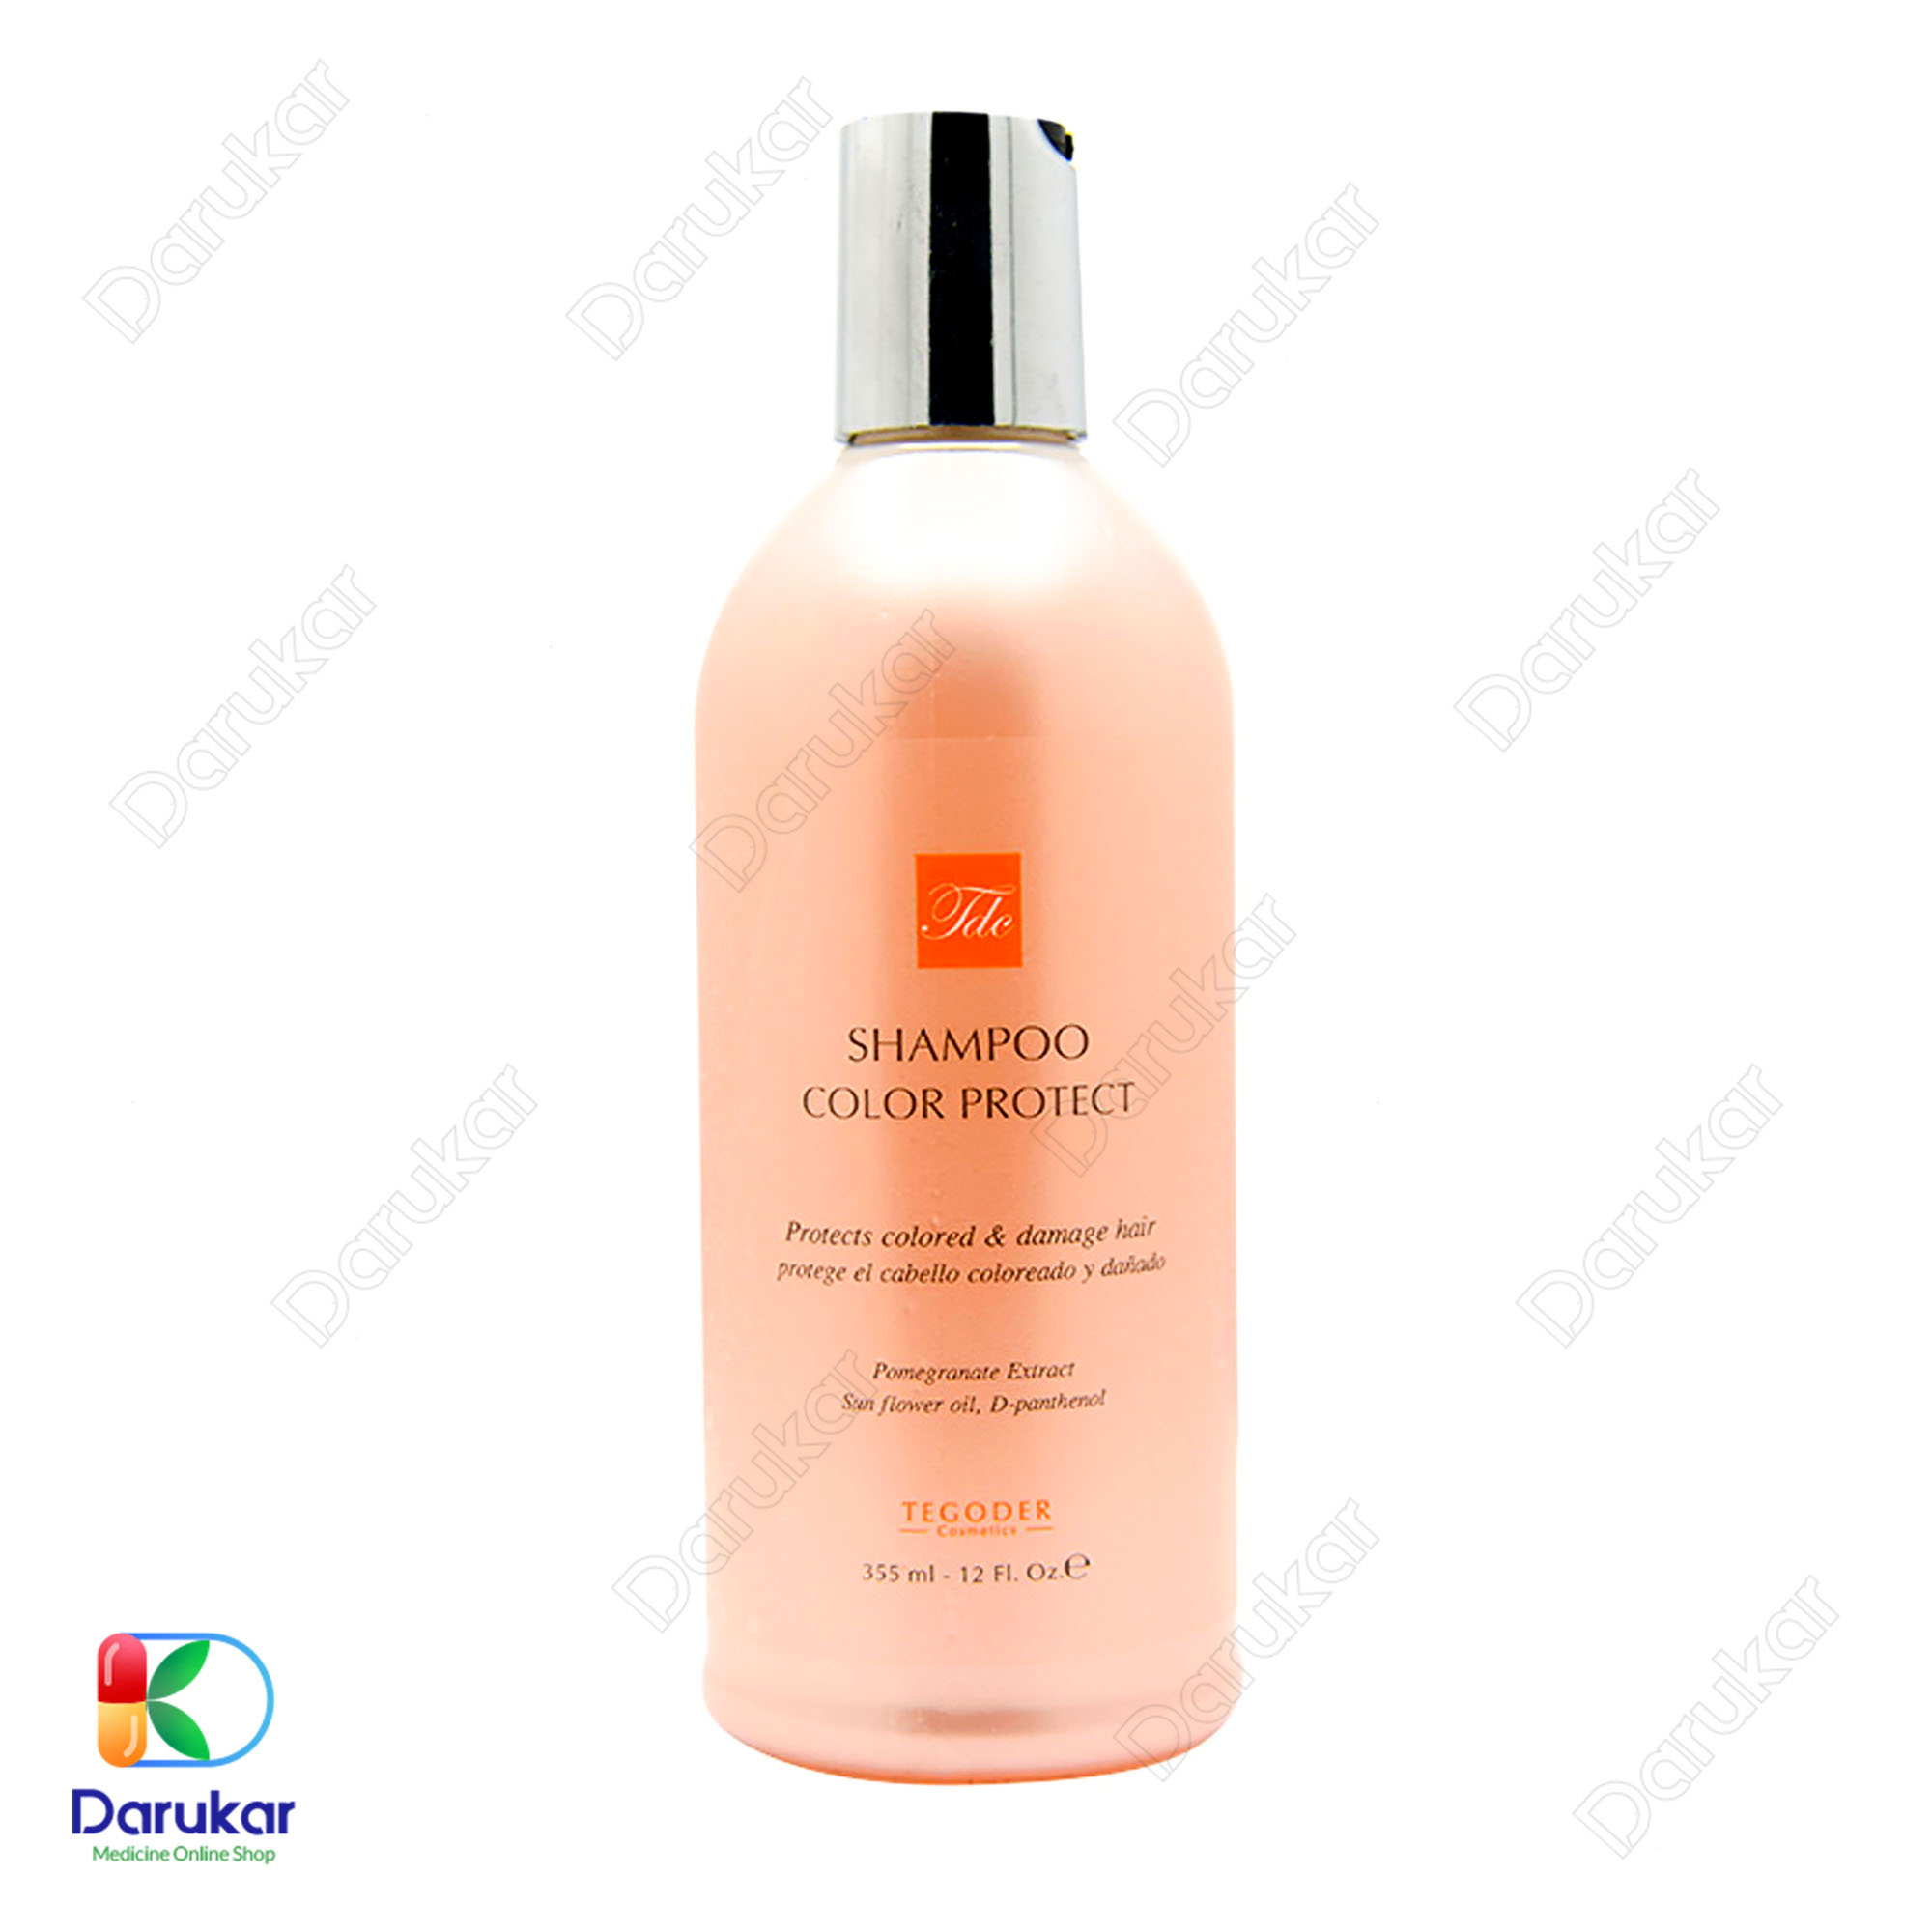 Tegoder Color Protect Shampoo 355ml 1